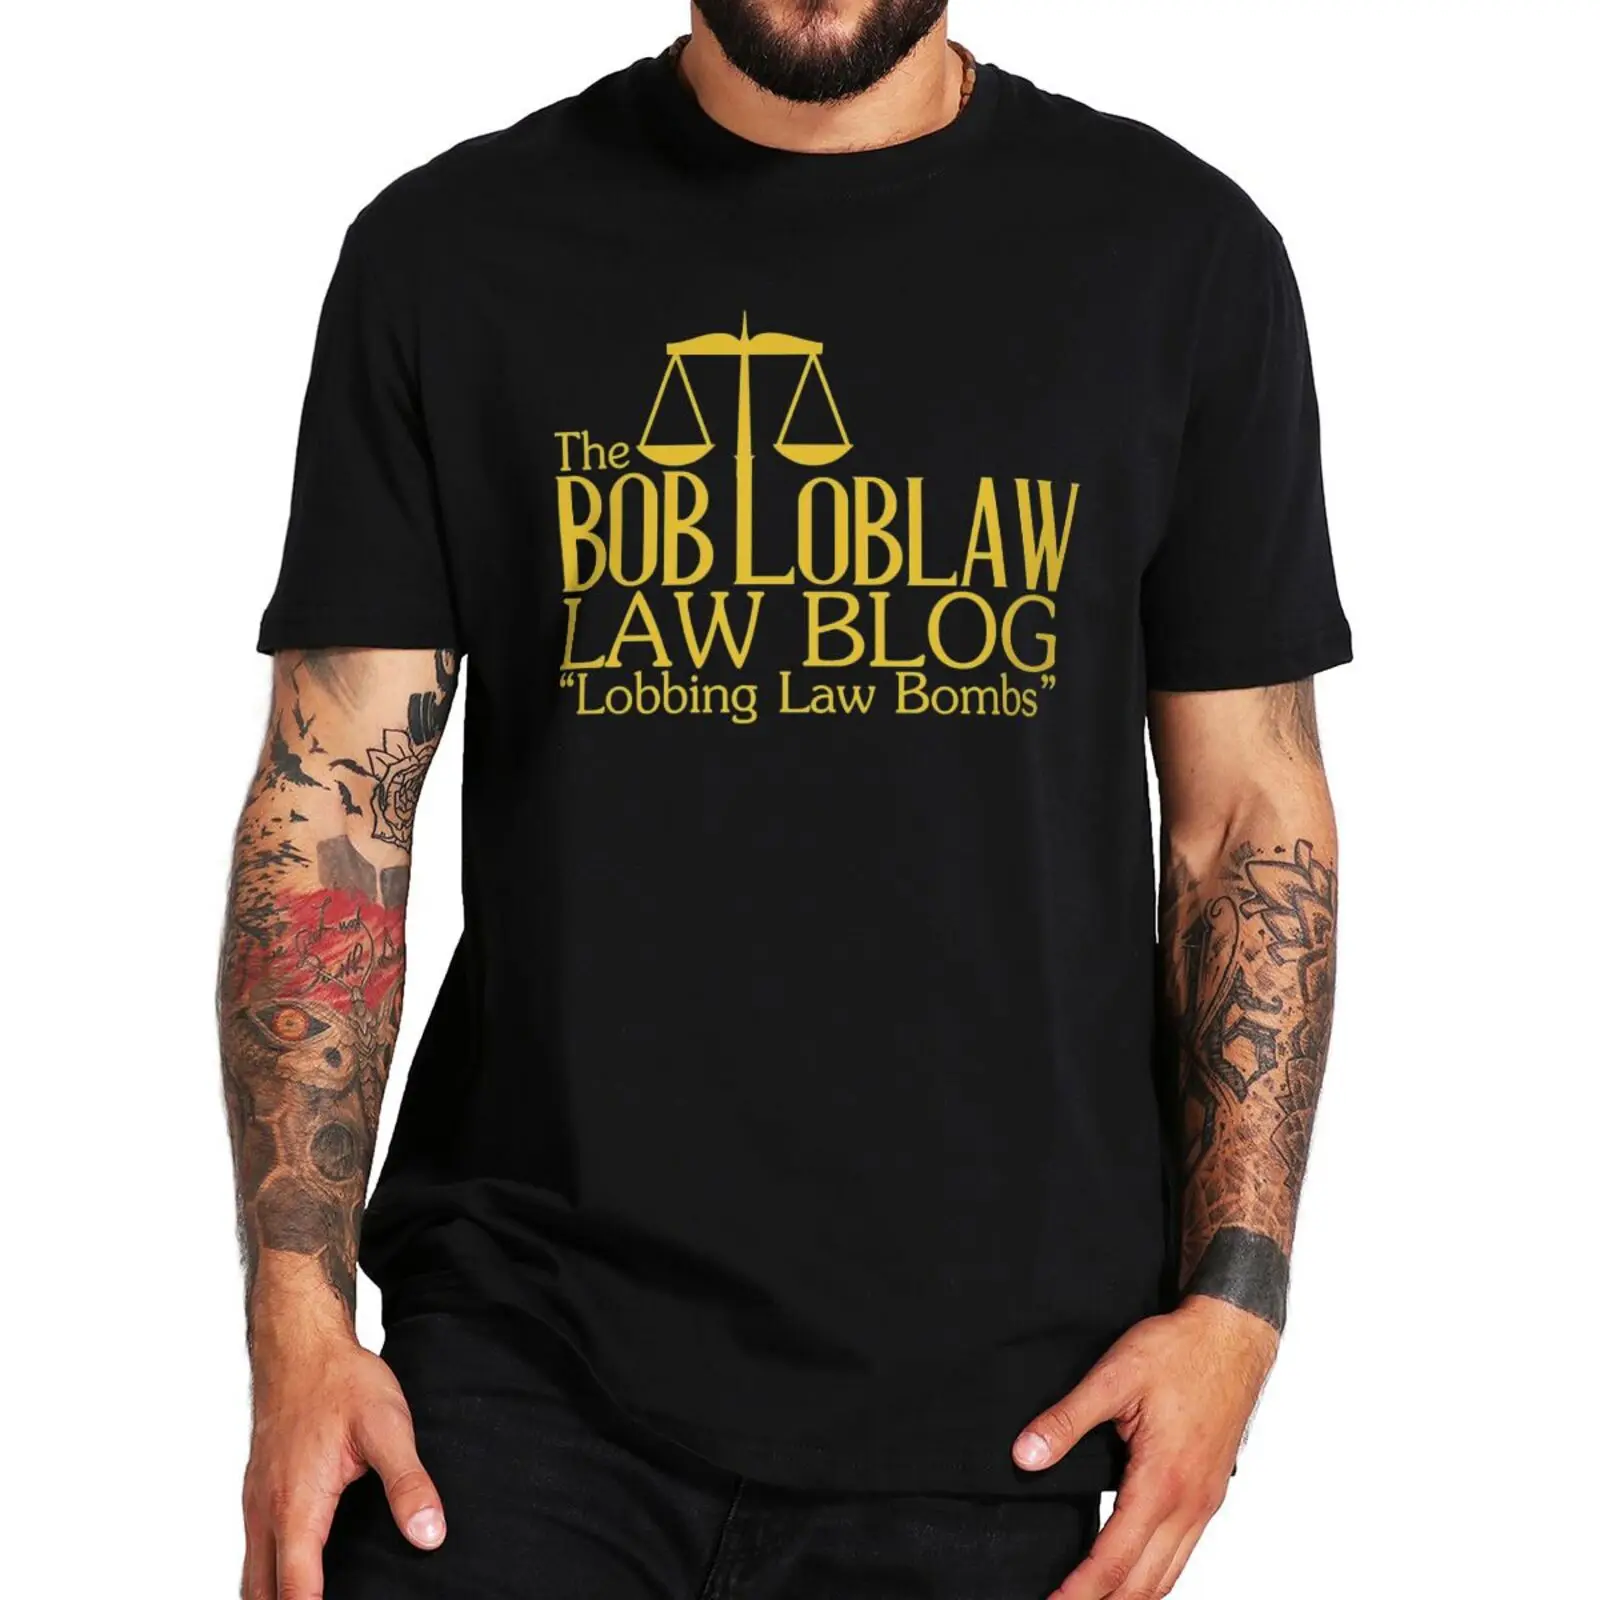 

Arrested Development T Shirt Classic Comedy Sitcom The Bob Loblaw Law Blog Tshirts Gift For Movie Fans 100% Cotton